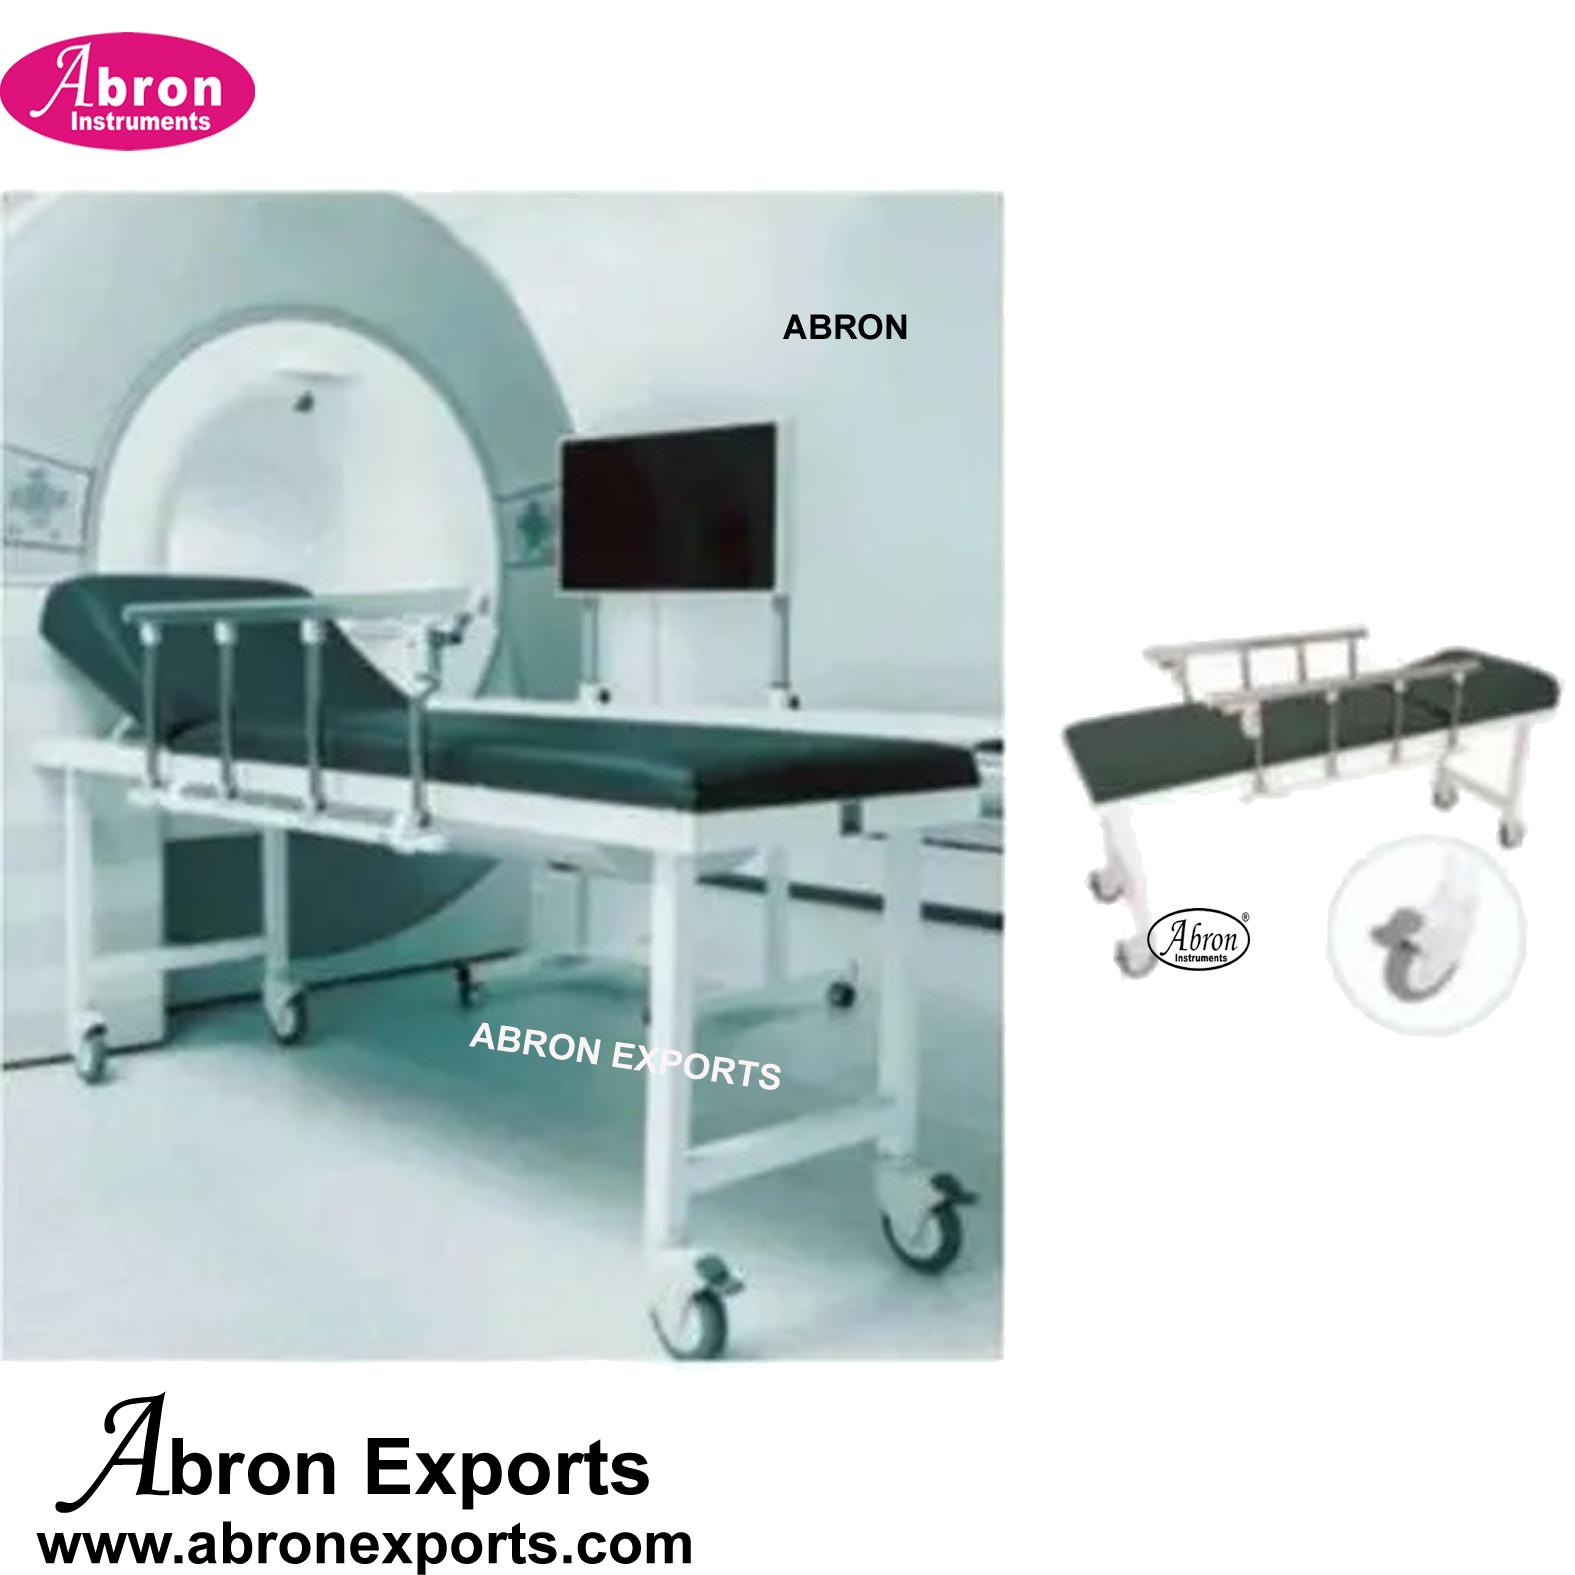  MRI  compatible stretcher 190x60x90cm with wheels mattres ainlinable Head Abron ABM-2291ST